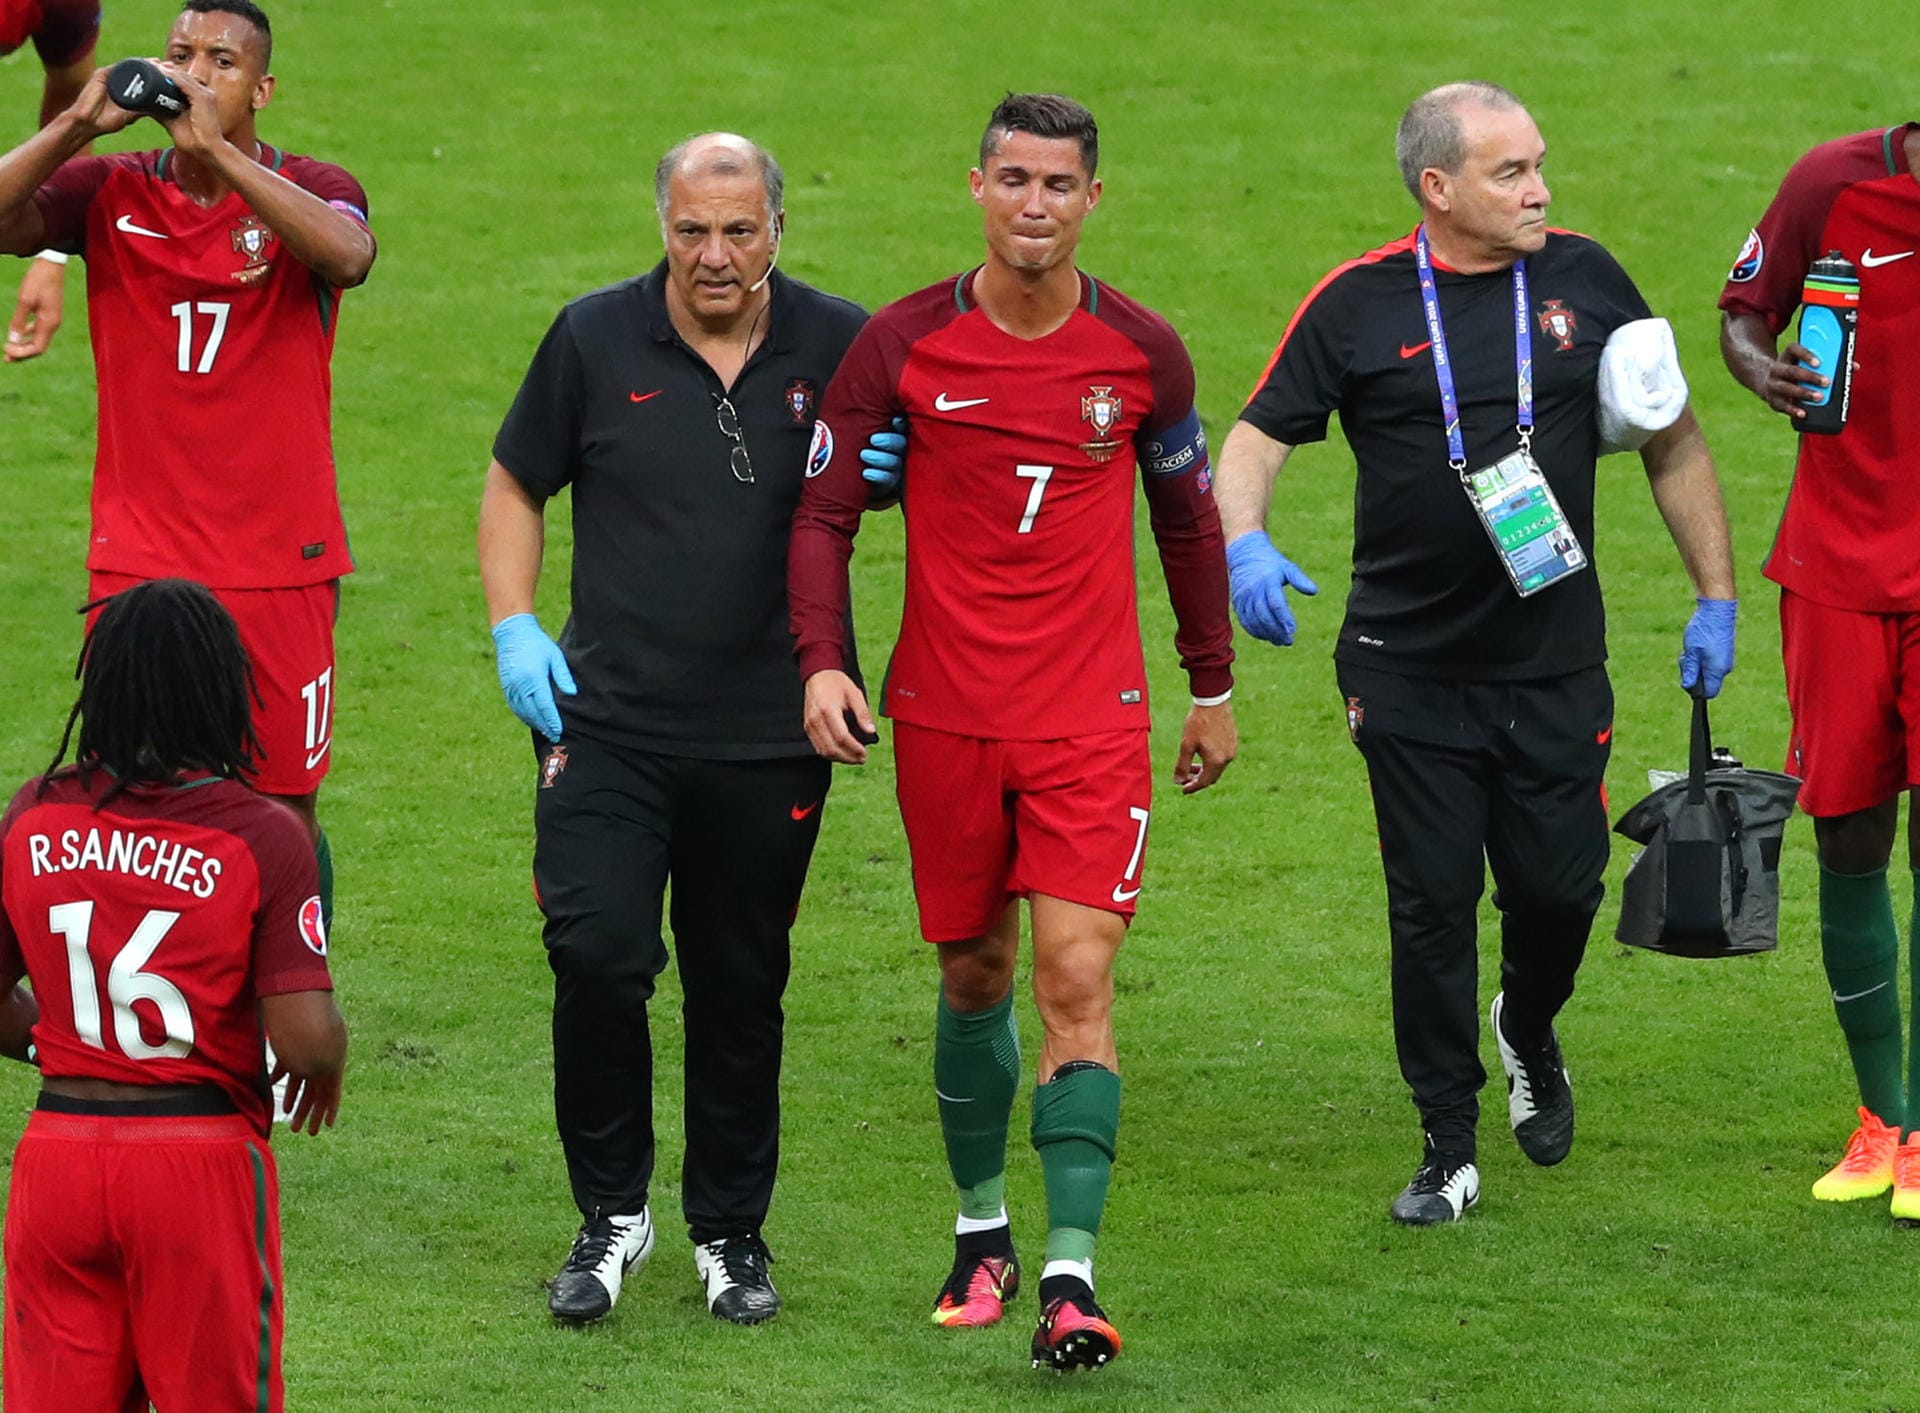 Bitter enttäuscht: Nach der Verletzungsbehandlung verlässt Ronaldo den Platz. Es versucht es noch einmal. Doch....